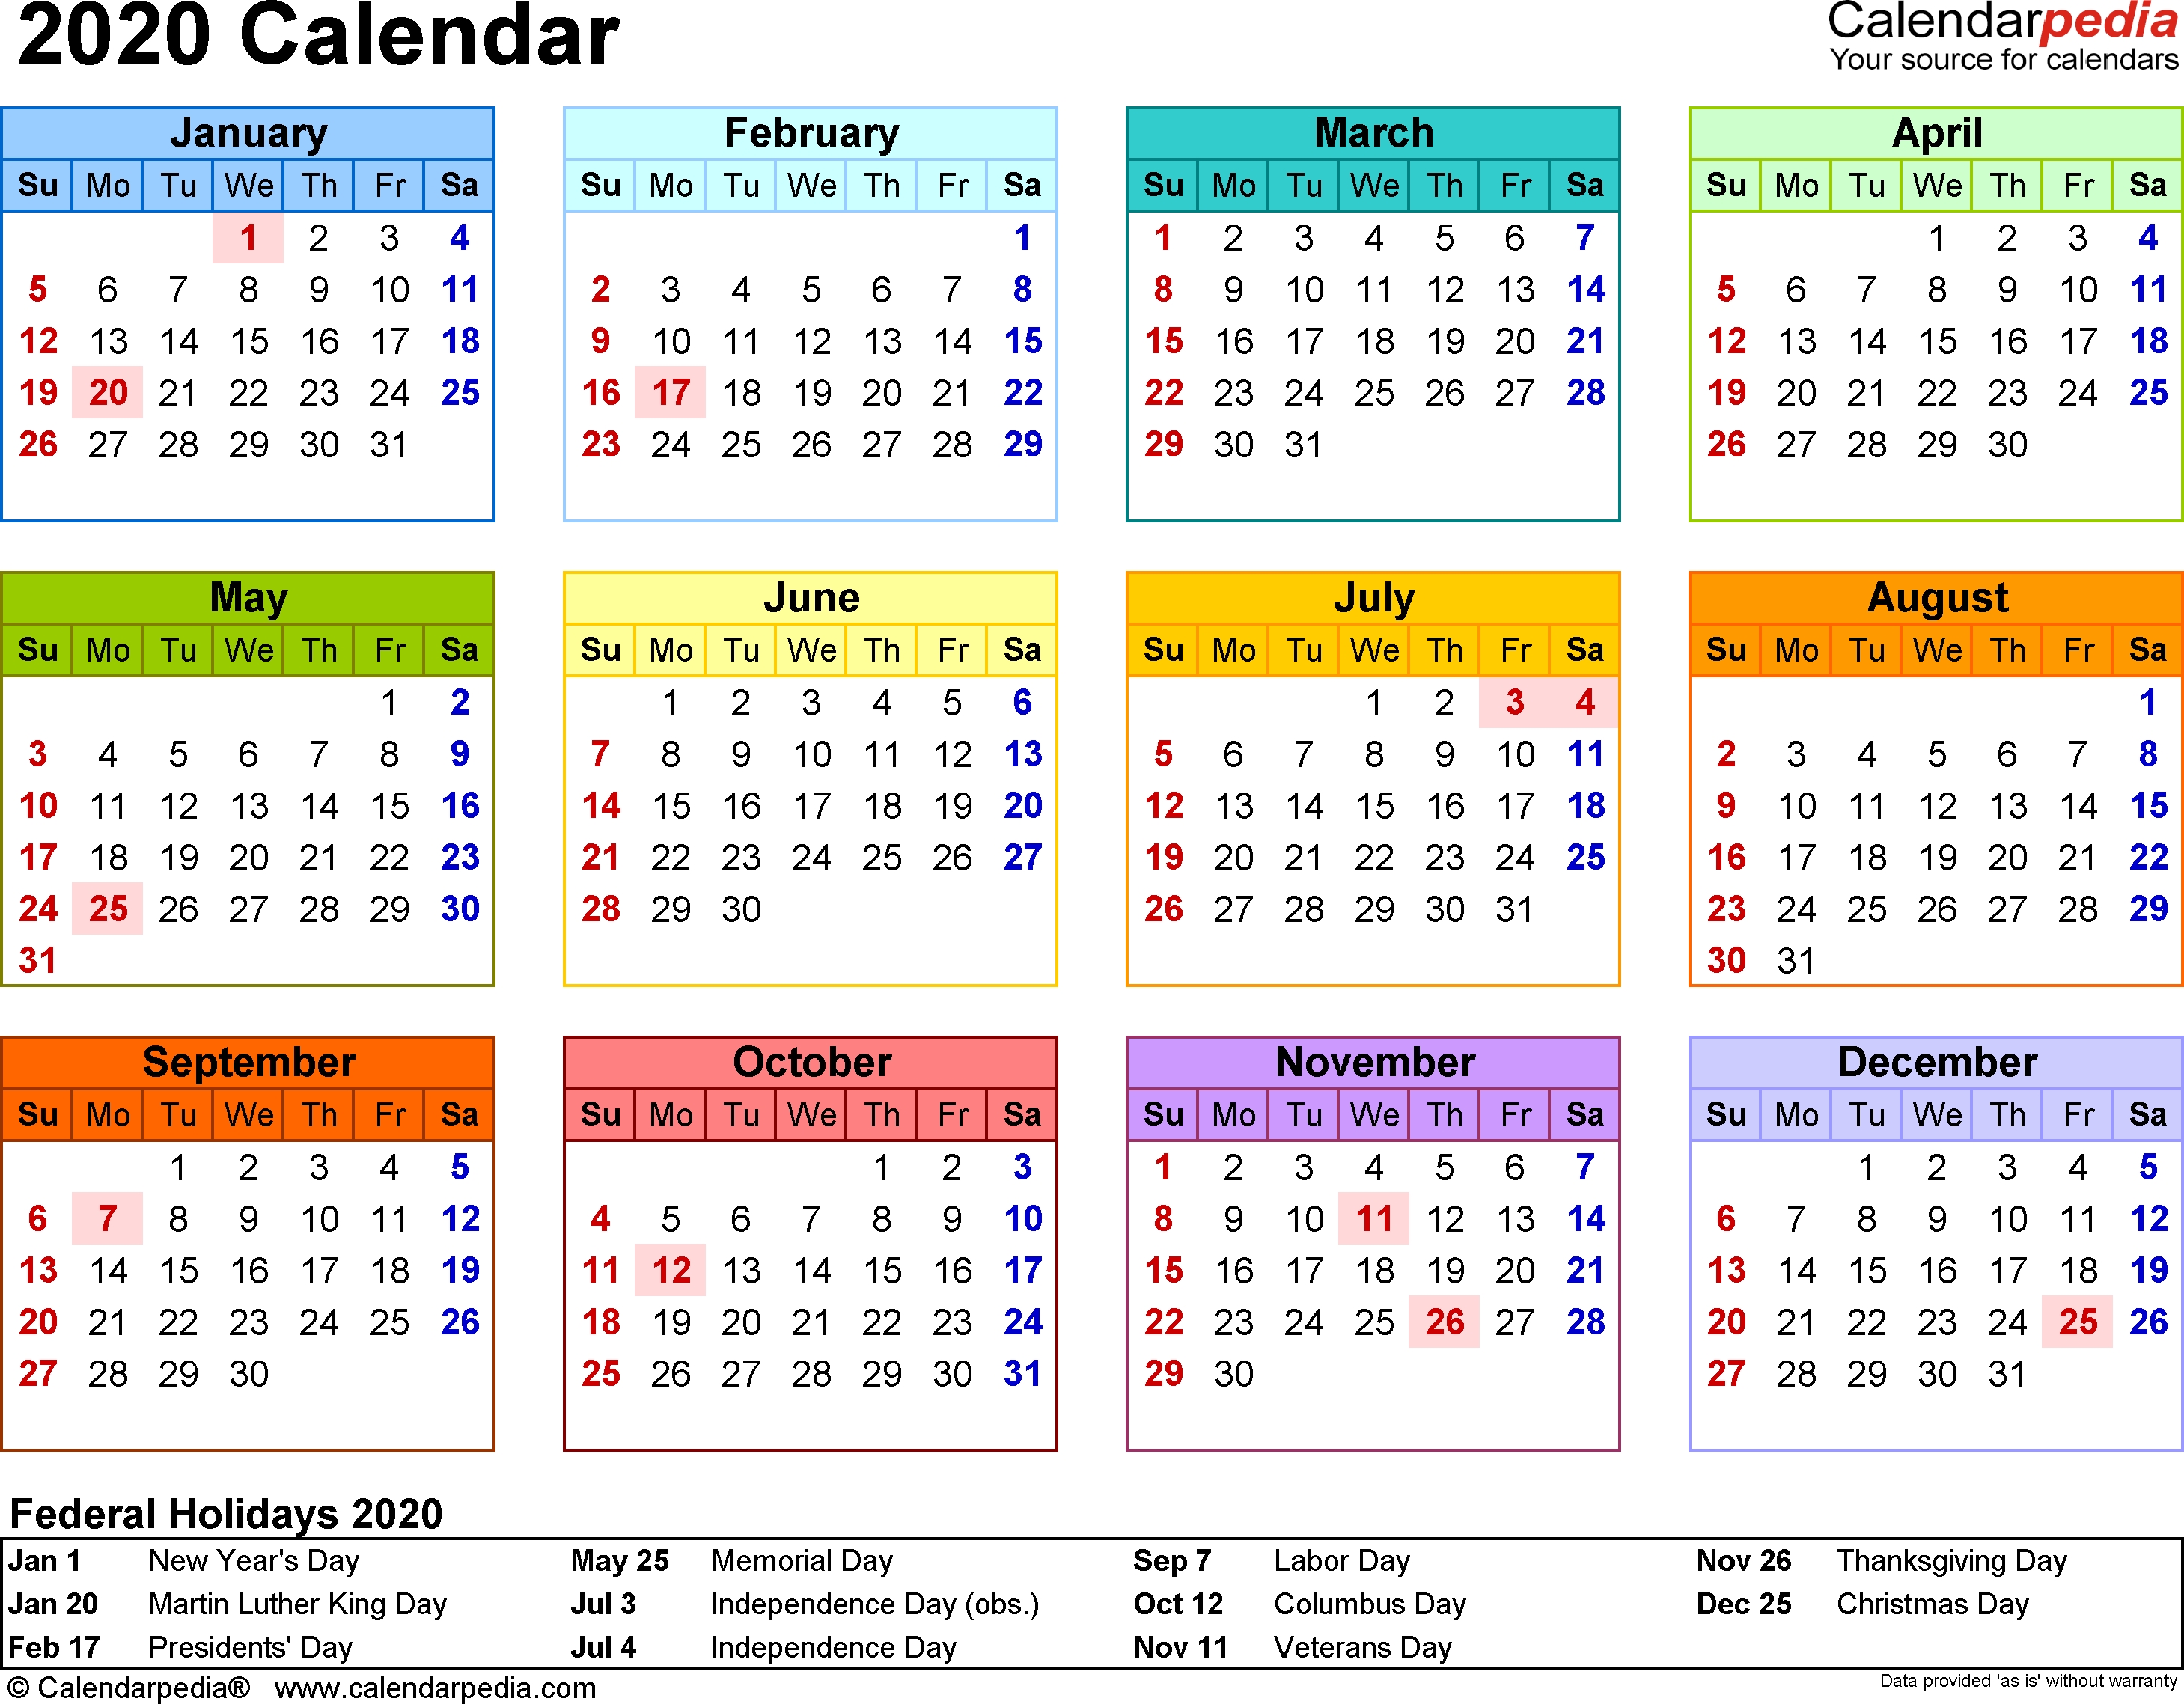 2020 Calendar - Free Printable Microsoft Word Templates South African Calendar 2020 Pdf